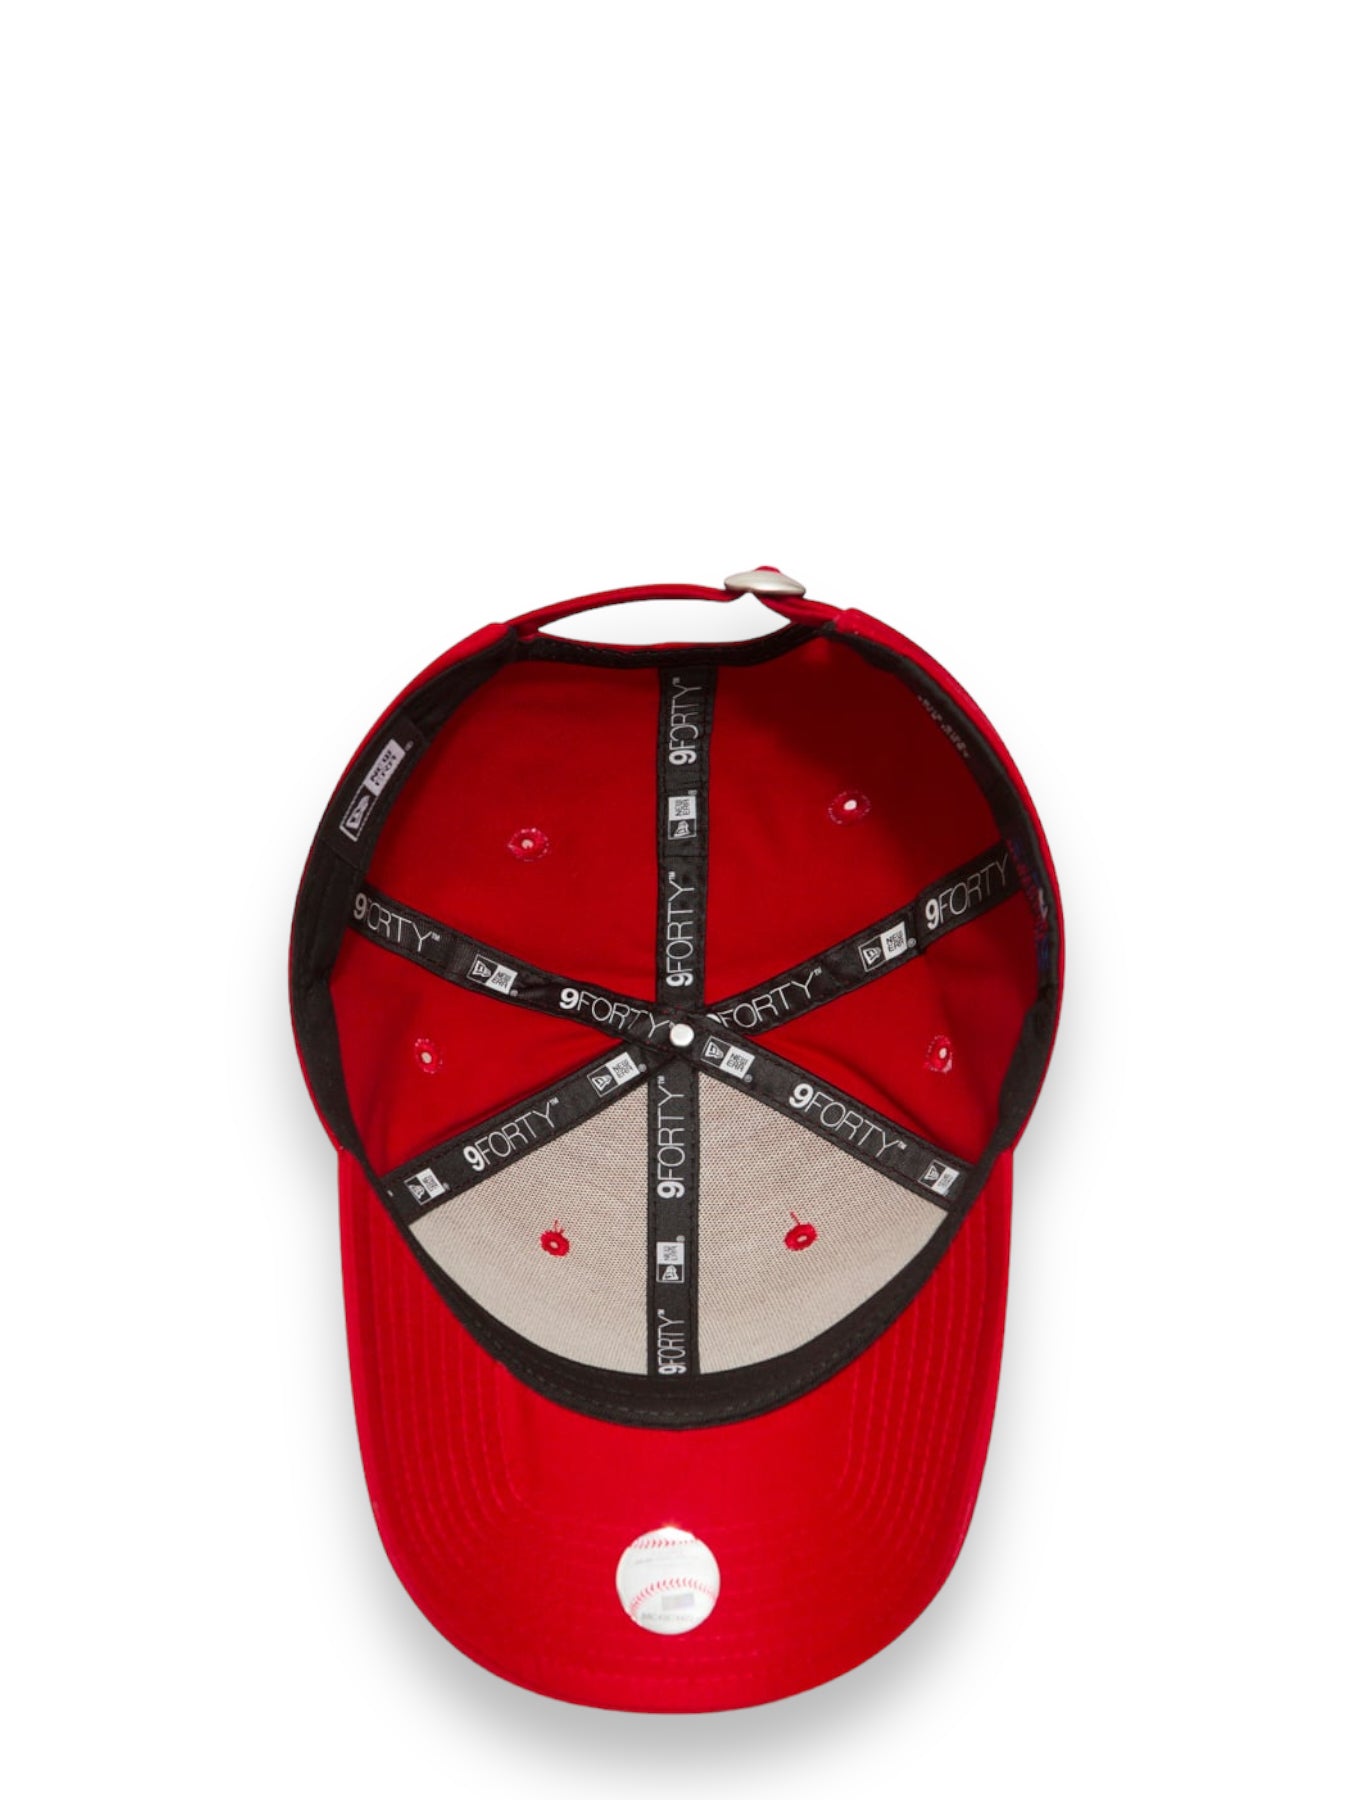 New Era Cappello Da Baseball 10531938 Red